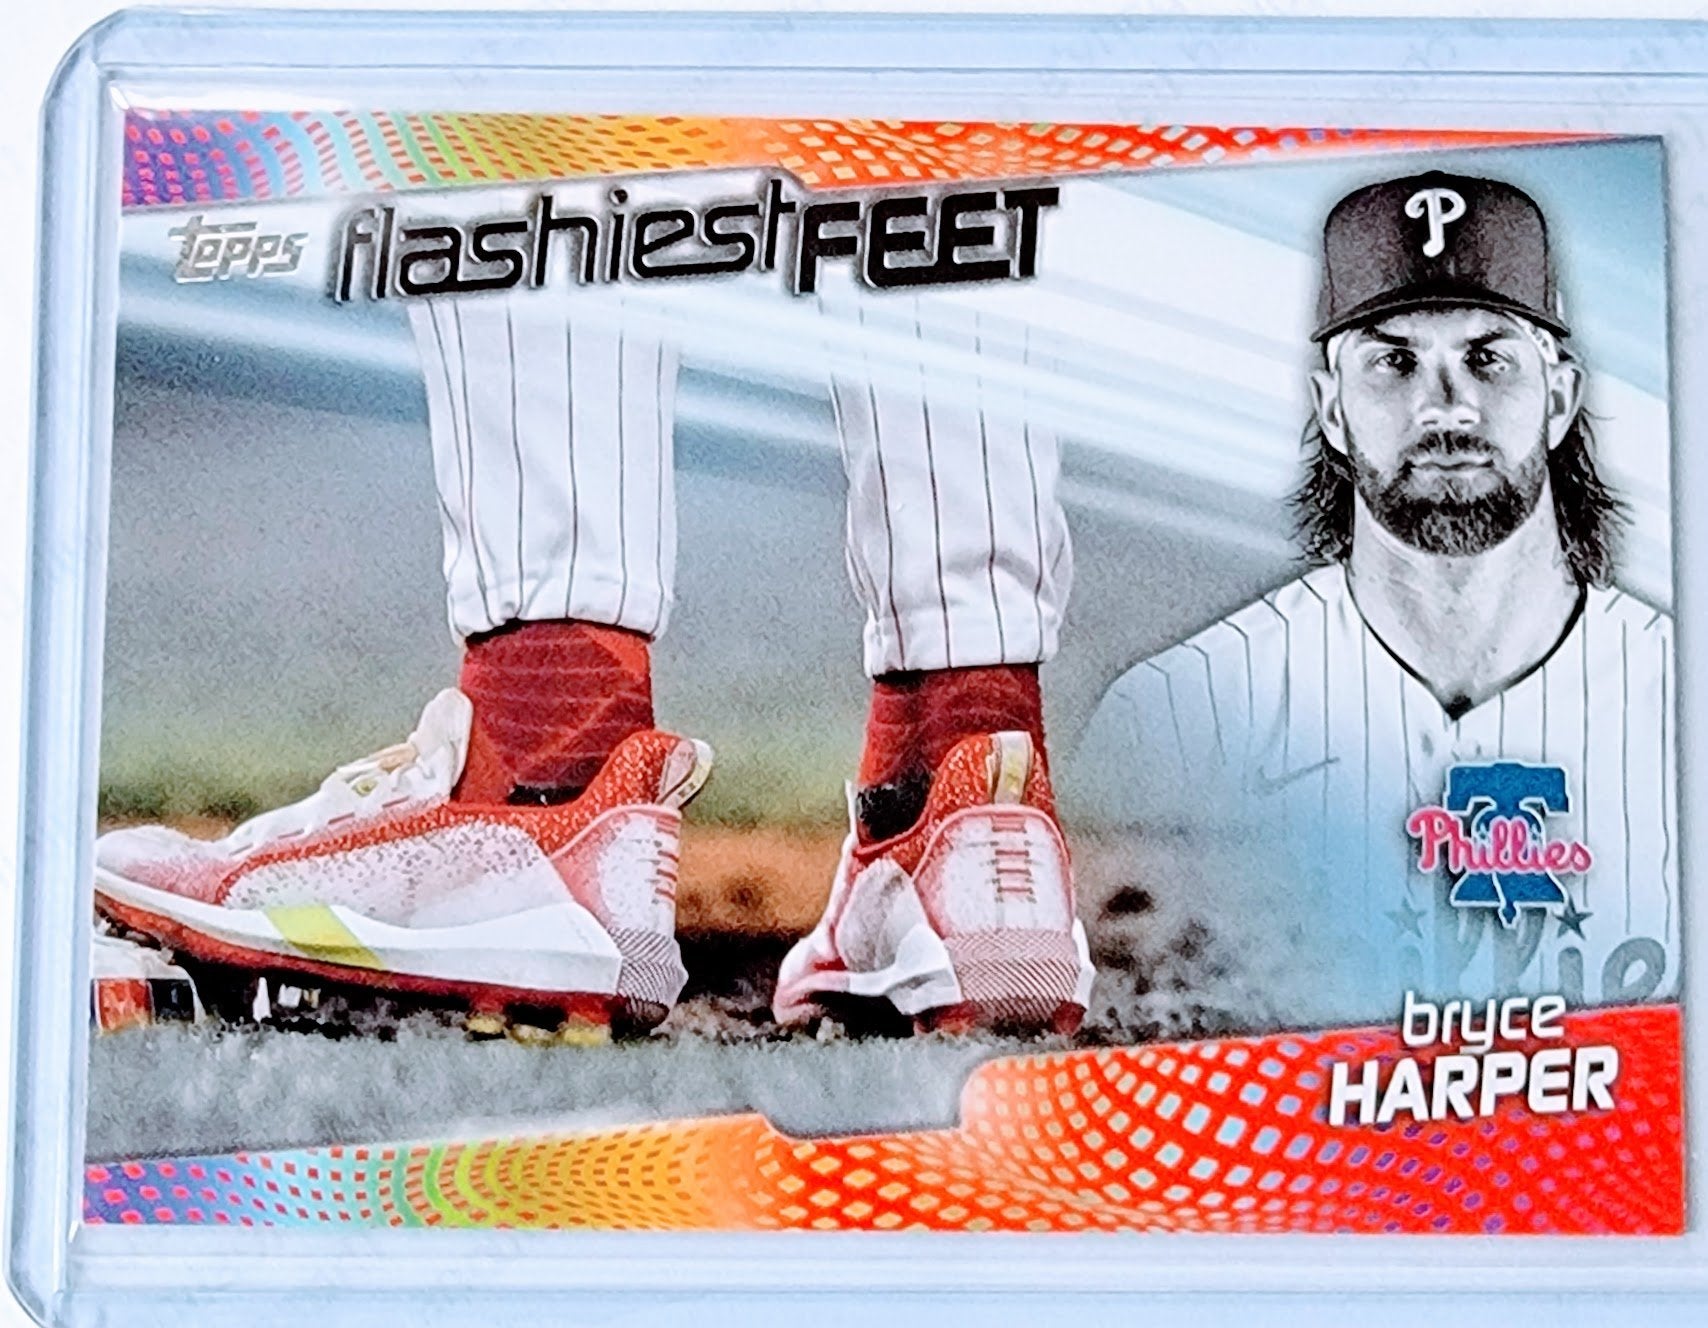 2022 Topps Bryce Harper Flashiest Feet Baseball Trading Card